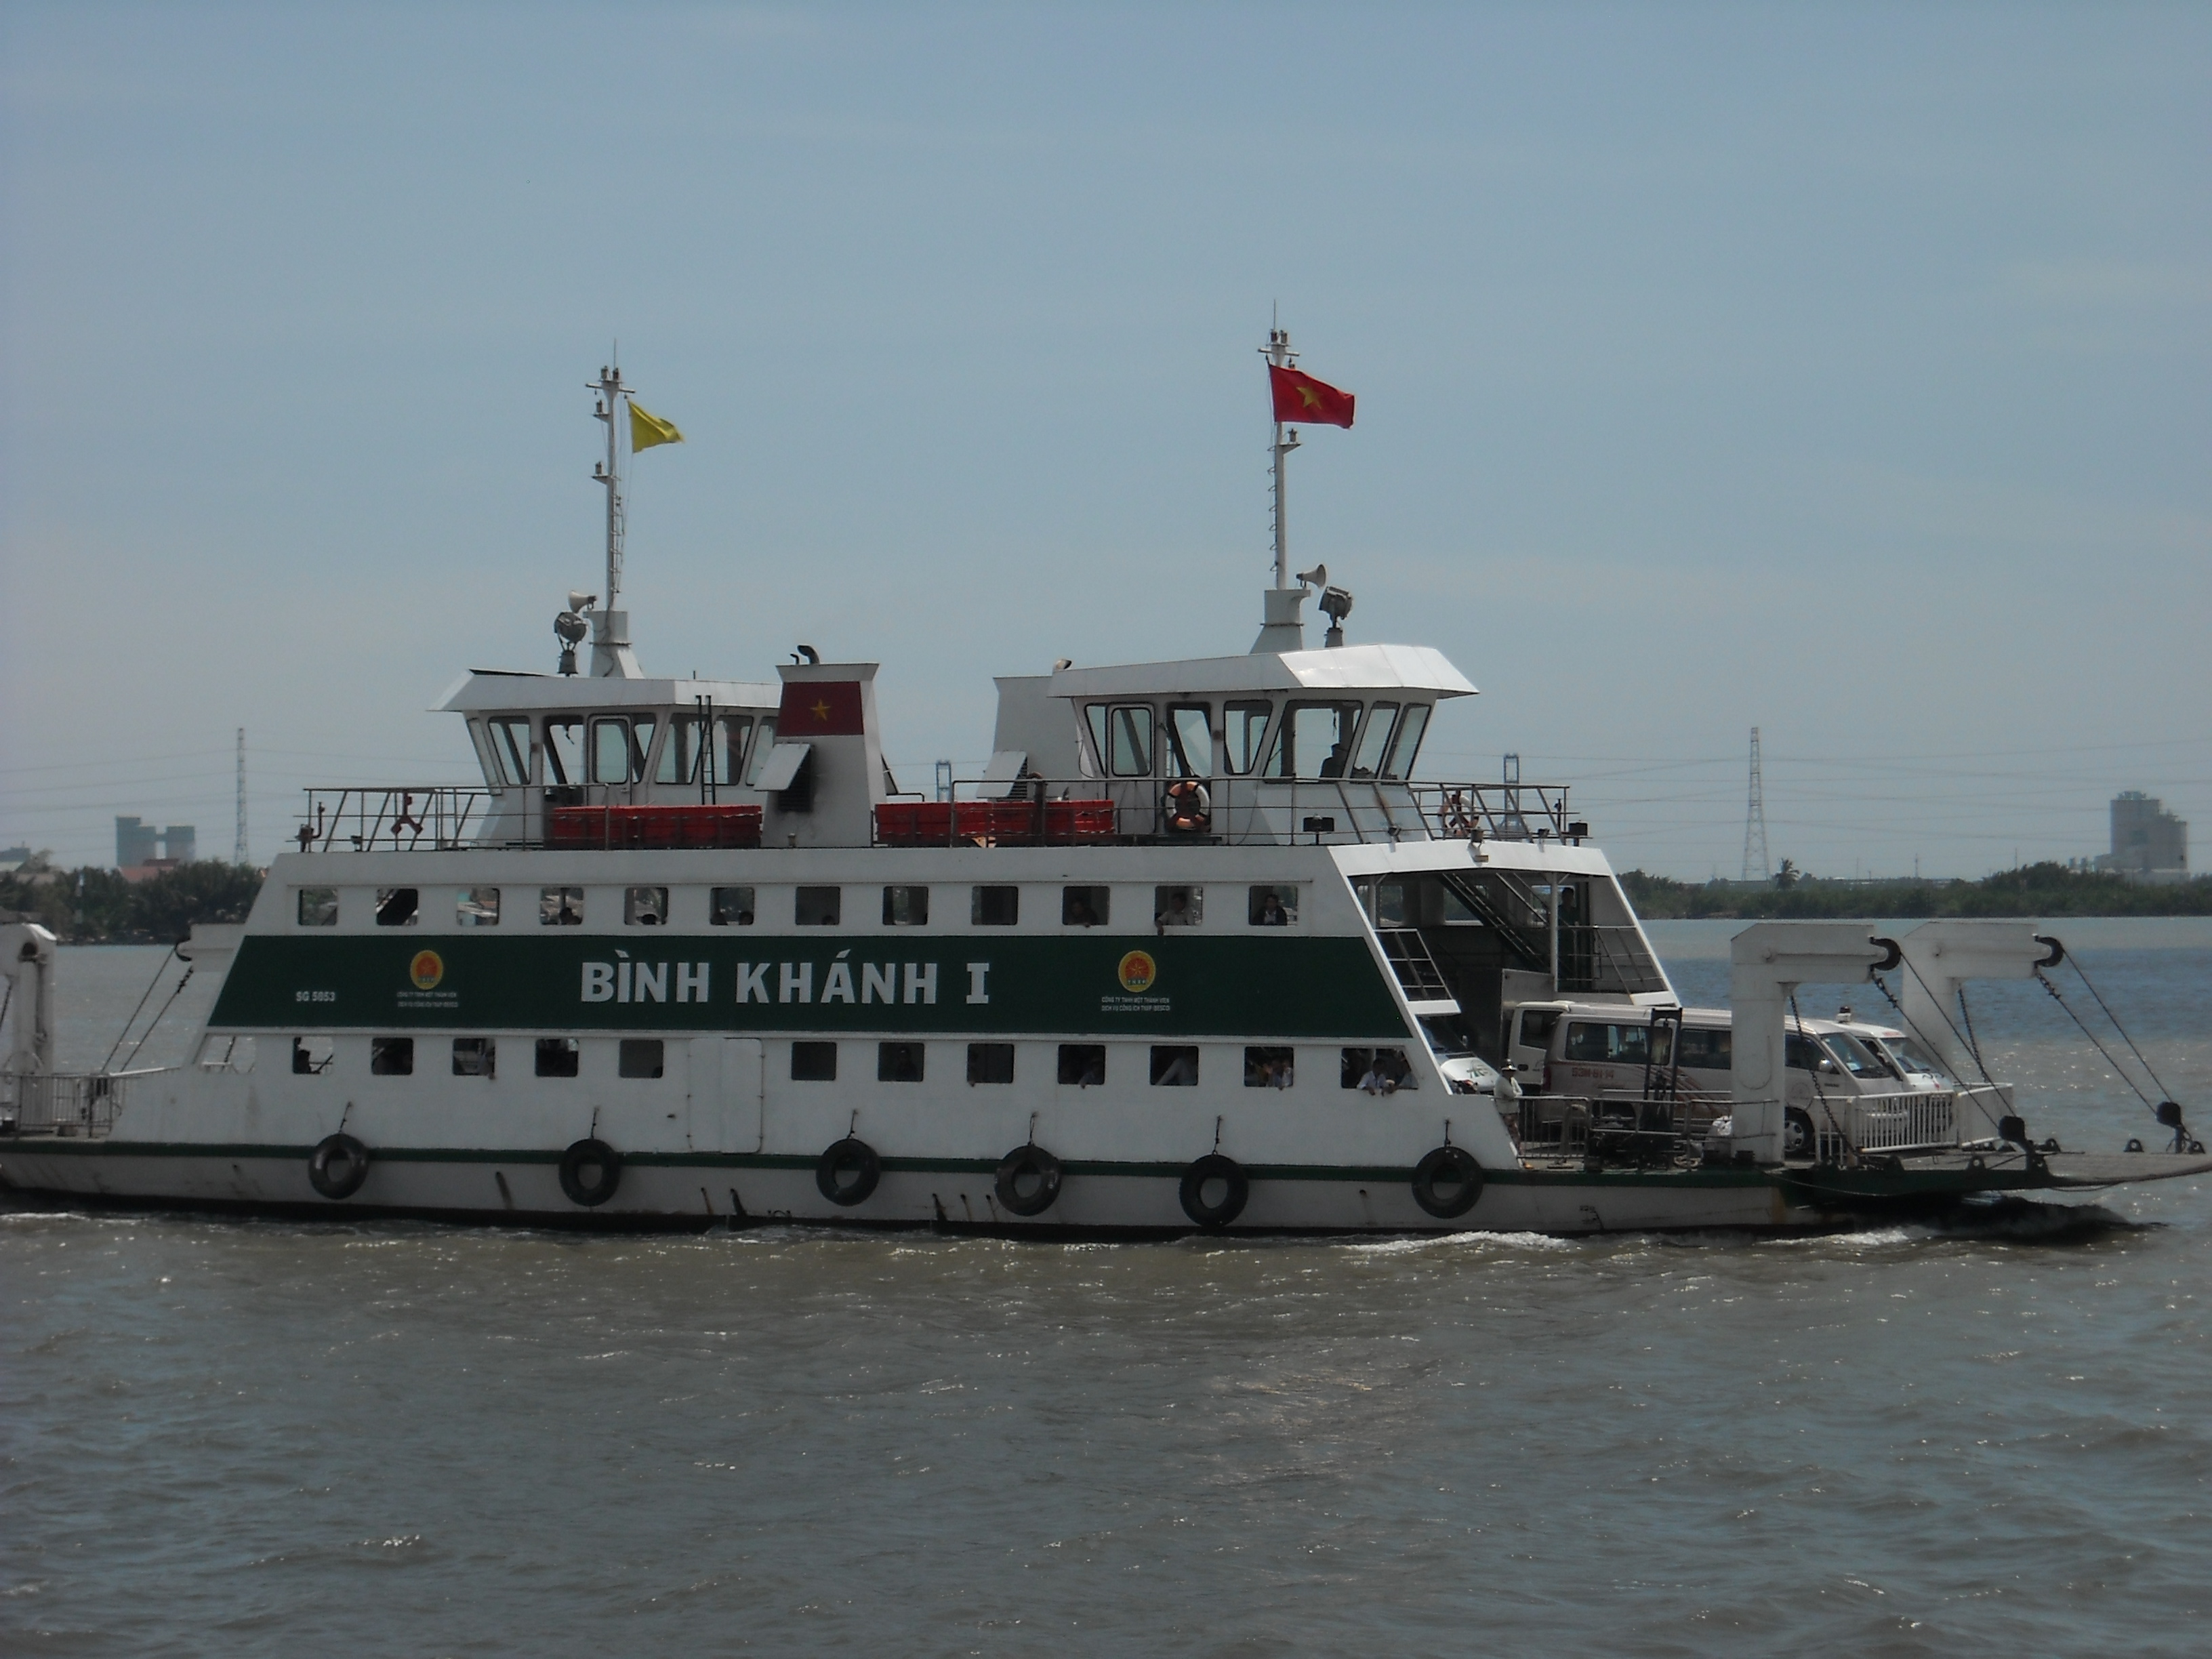 File:The Binh Khanh I, a ferry on the Mekong River -a.jpg ...